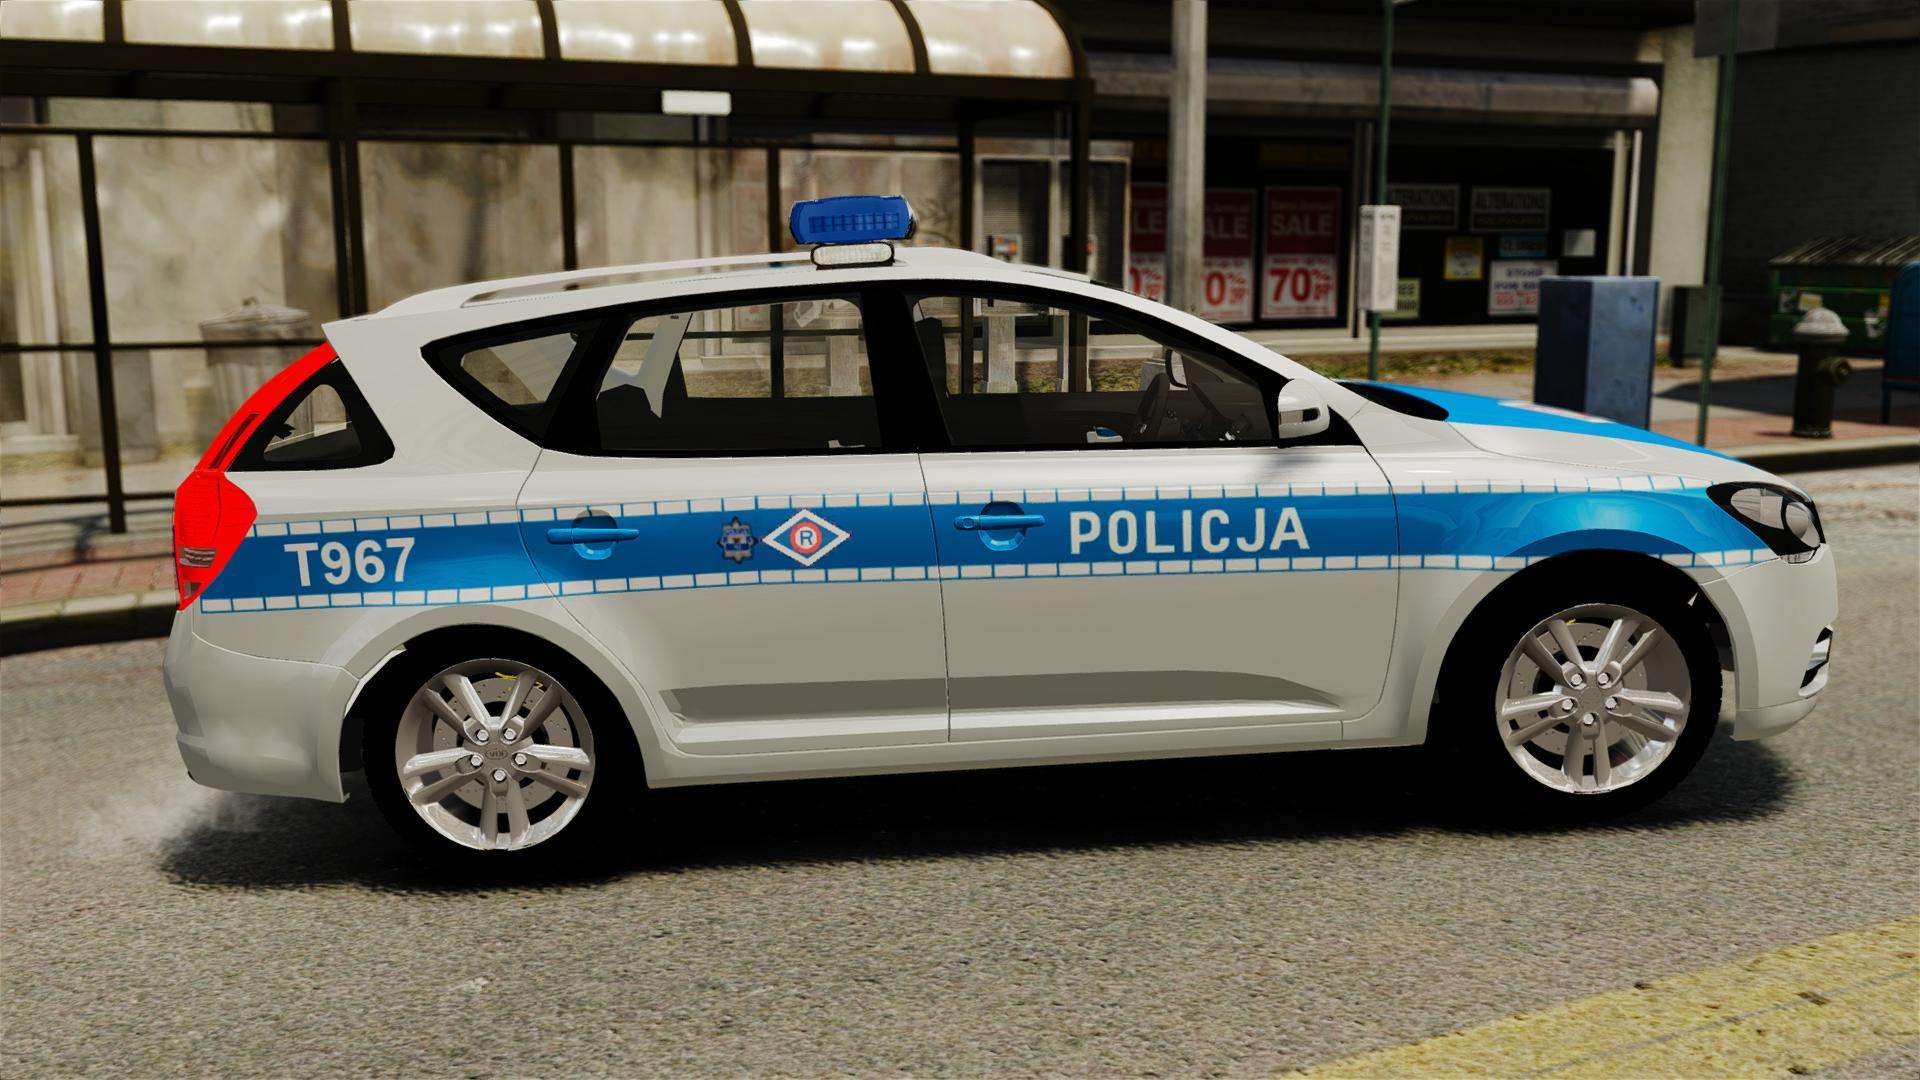 Kia Ceed 2011 SW Polish Police ELS for GTA 4